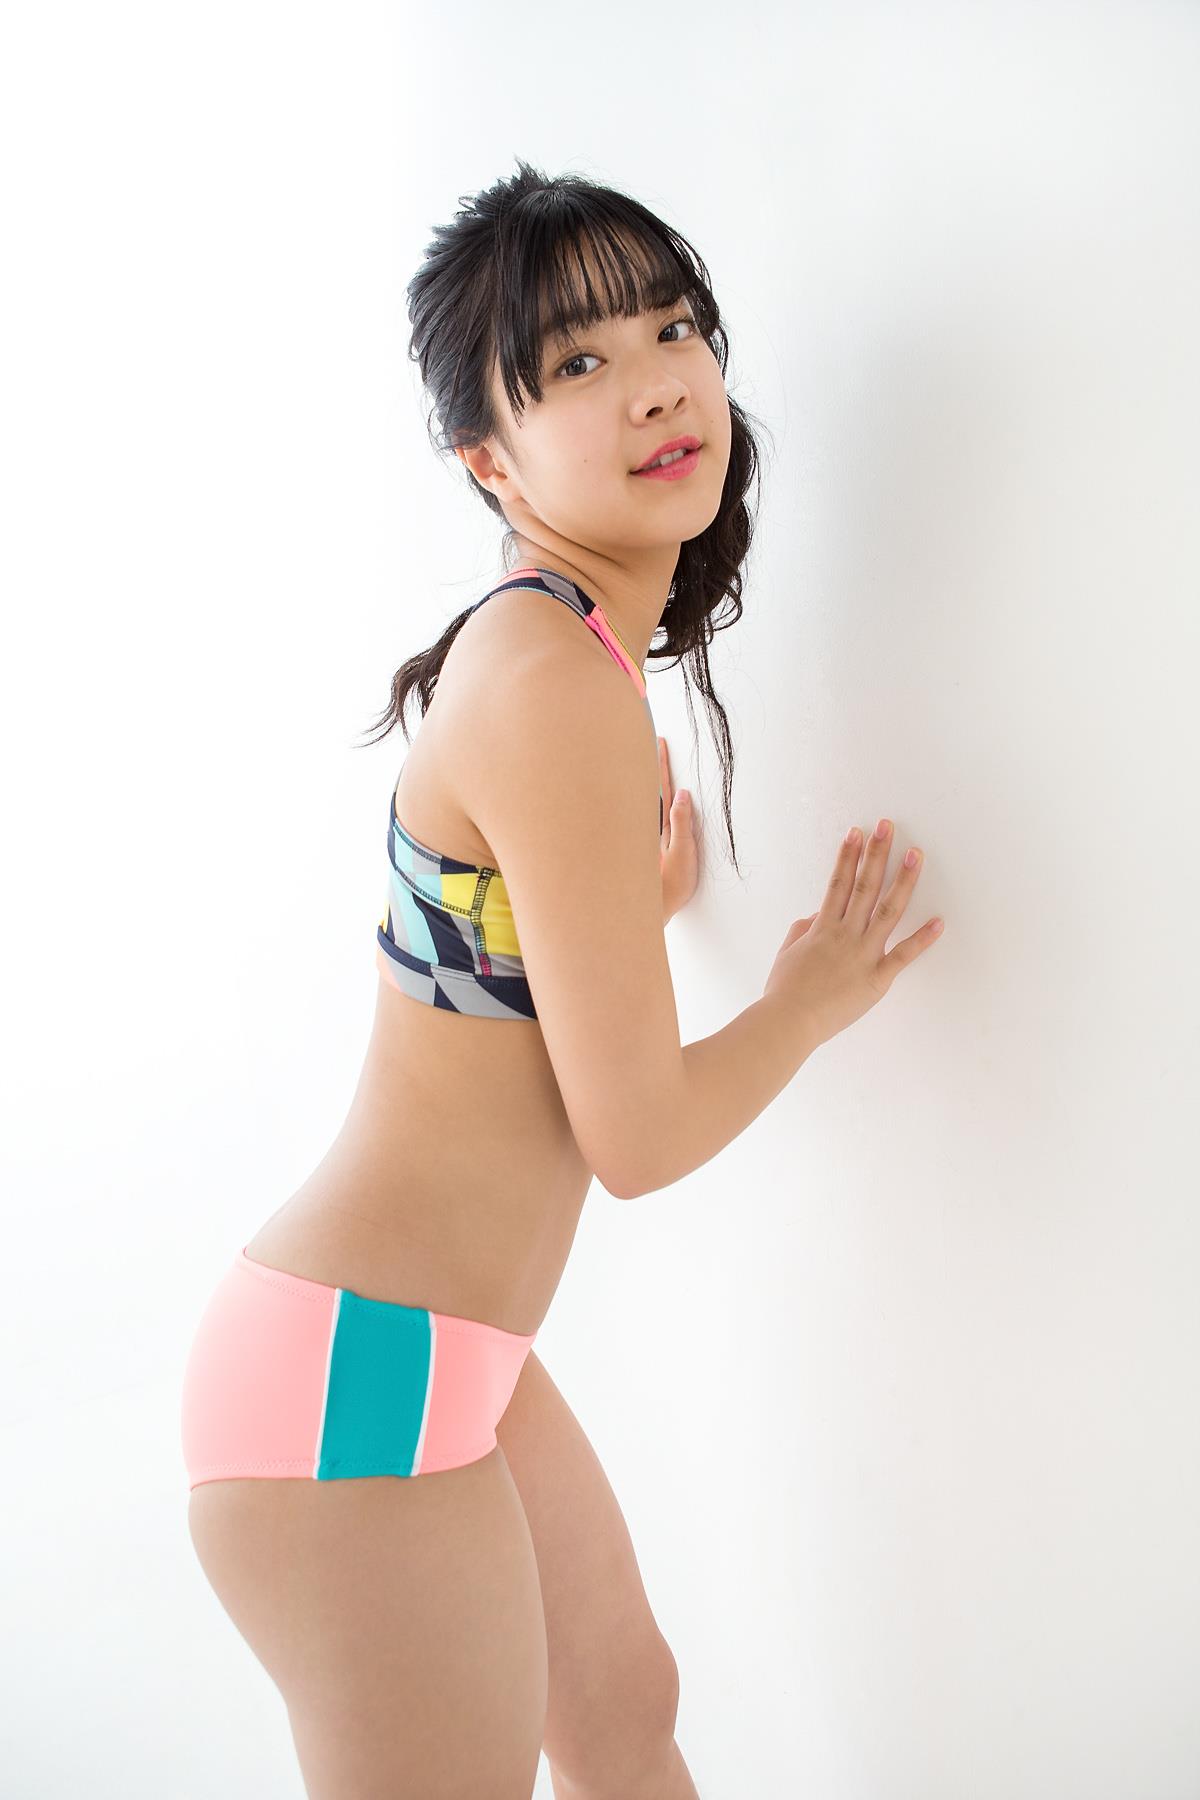 Minisuka.tv Saria Natsume 夏目咲莉愛 Premium Gallery 04 - 31.jpg